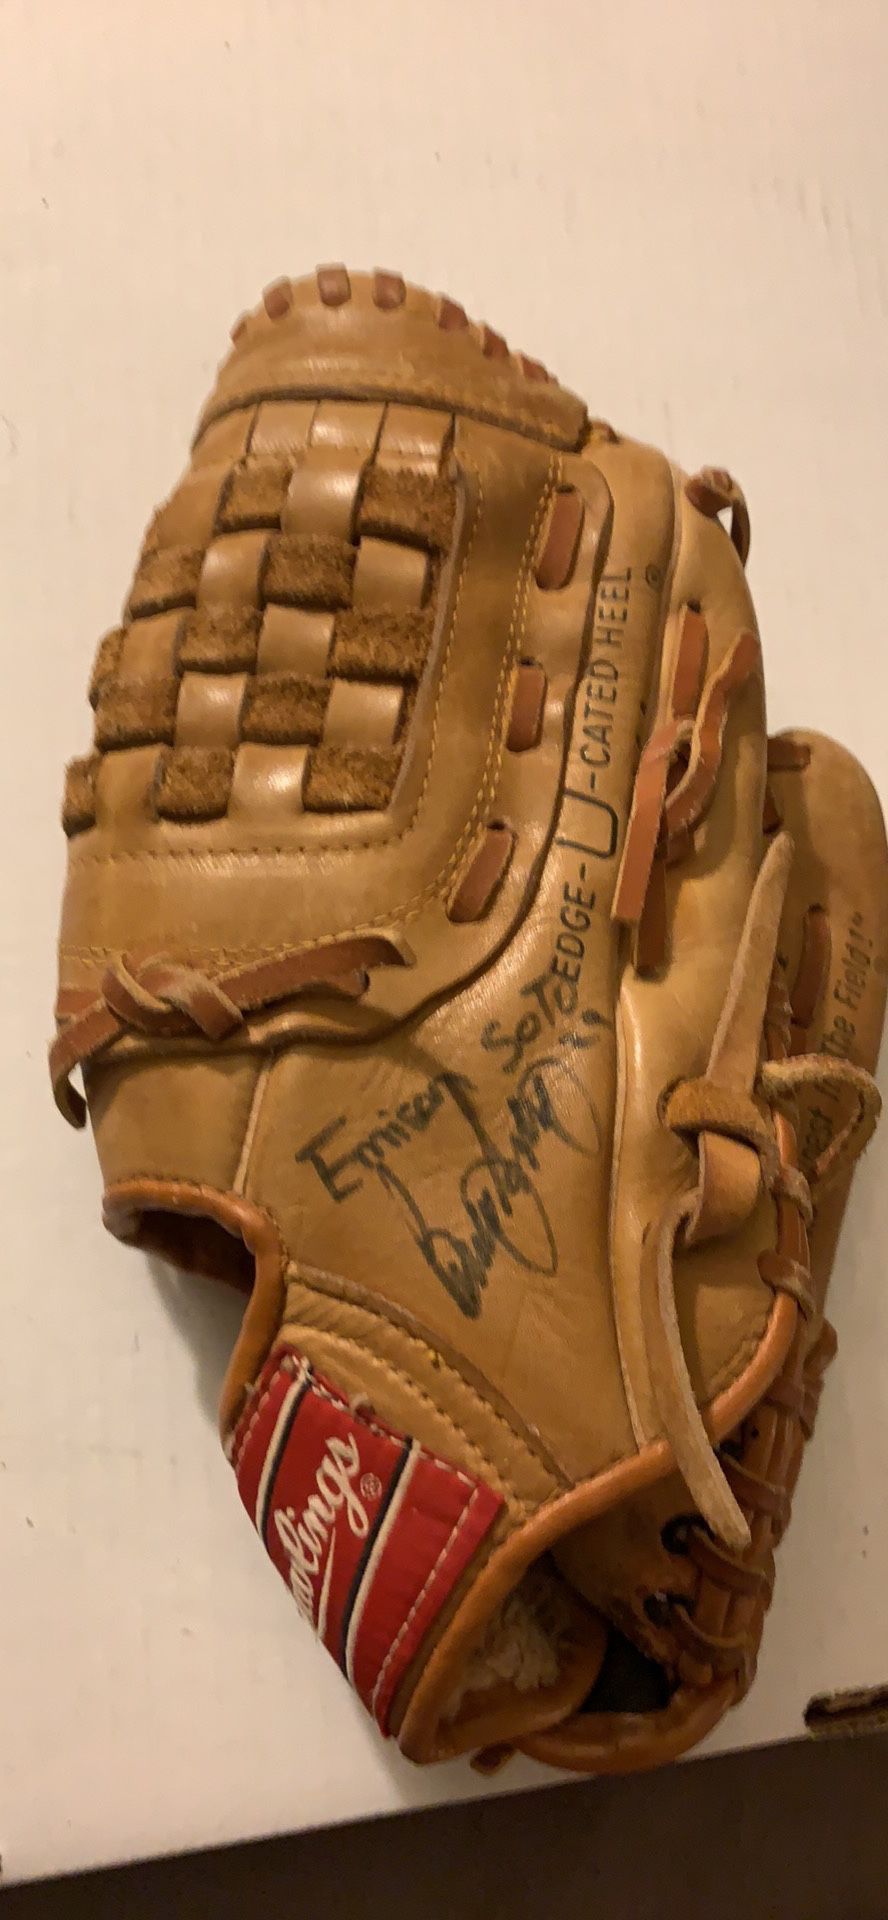 Rawlings RBG 224 Ken Griffey Jr. Baseball Mitt Glove 11 inch